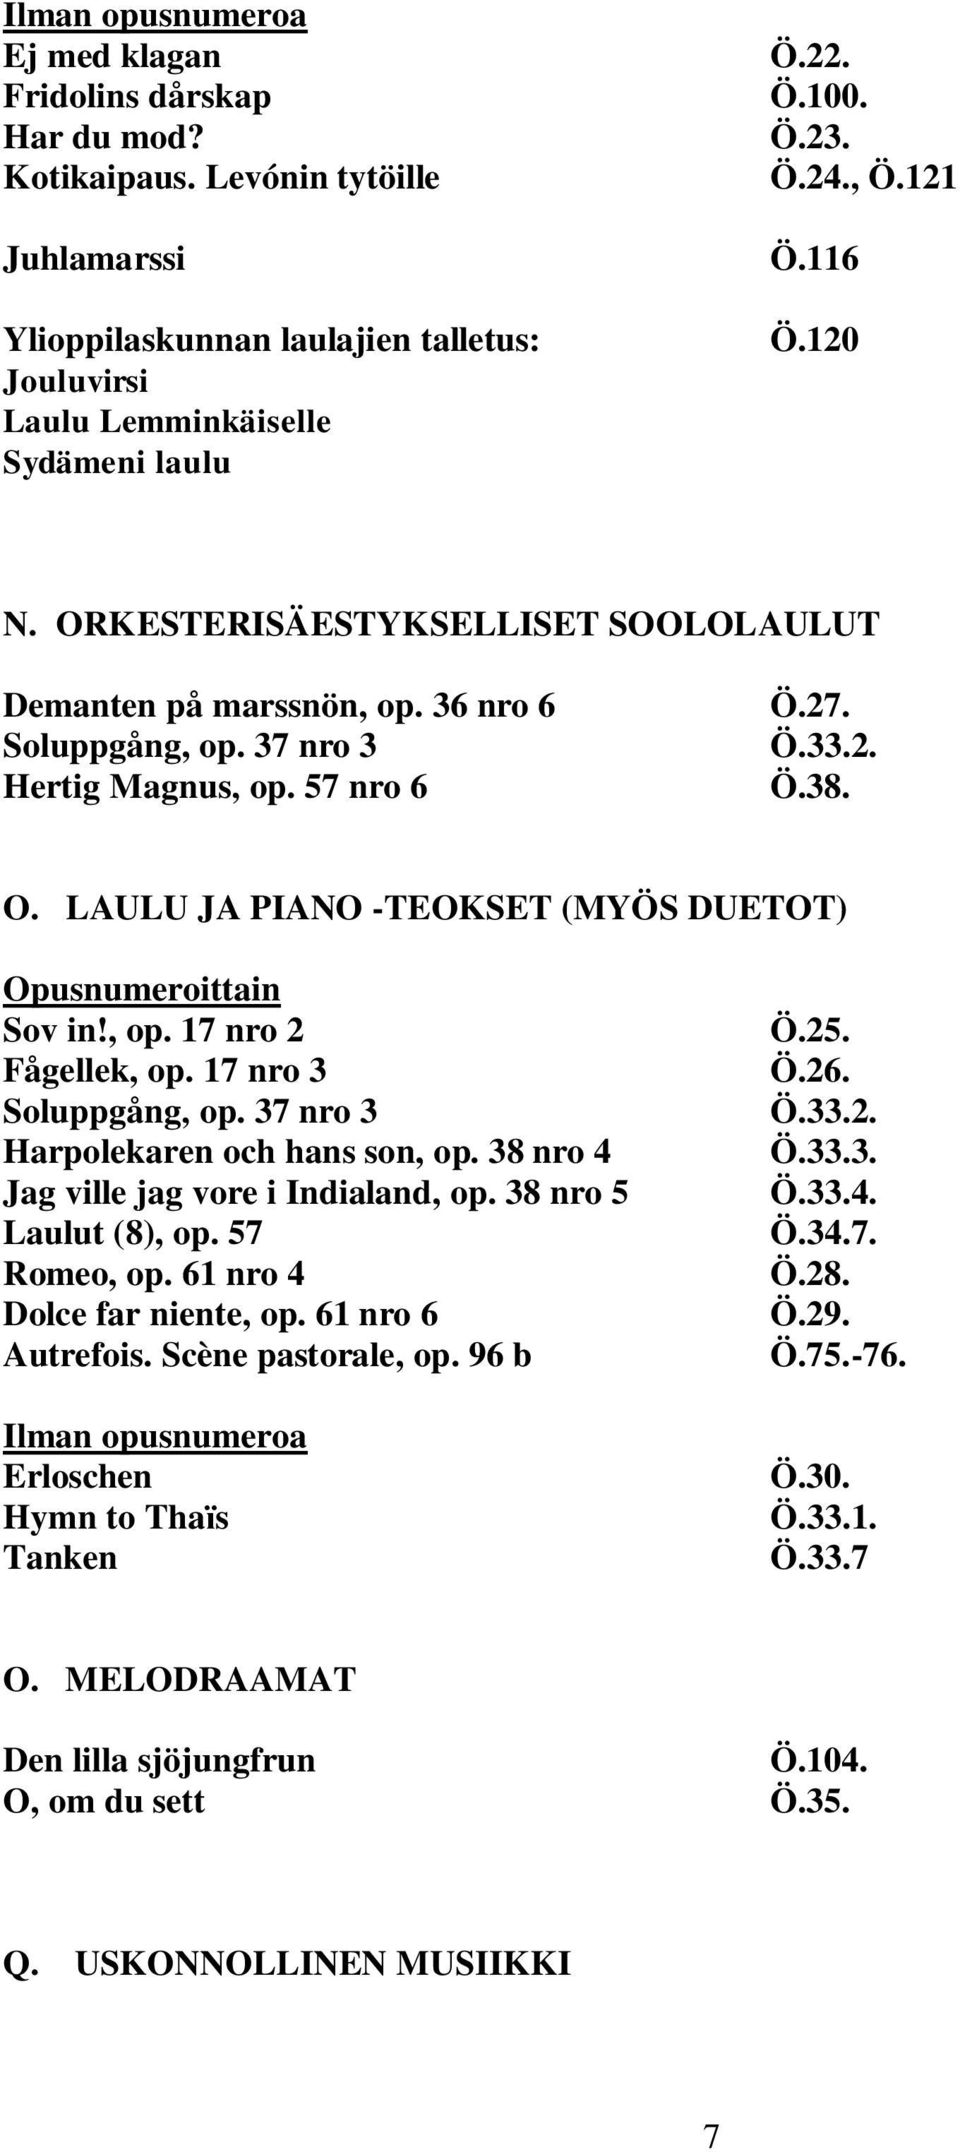 O. LAULU JA PIANO -TEOKSET (MYÖS DUETOT) Opusnumeroittain Sov in!, op. 17 nro 2 Fågellek, op. 17 nro 3 Soluppgång, op. 37 nro 3 Harpolekaren och hans son, op.